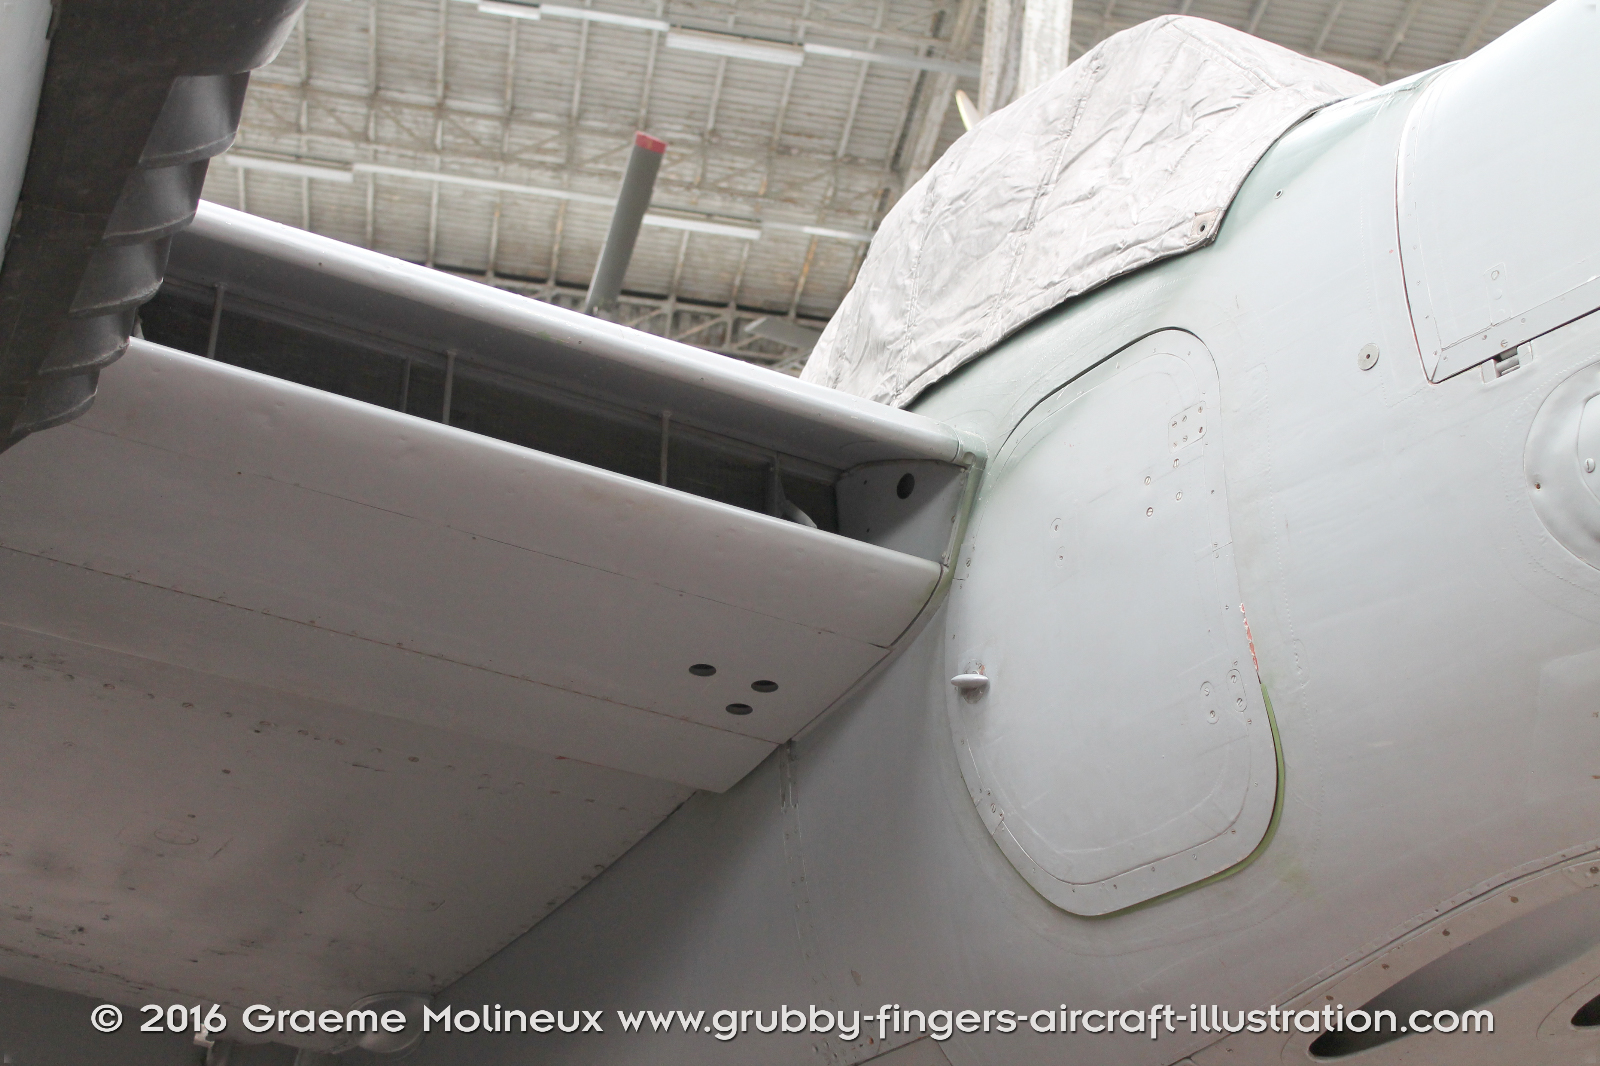 de_Havilland_Mosquito_Walkaround_Mk30_MB-42_Belgian_Air_Force_Museum_2015_20_GraemeMolineux